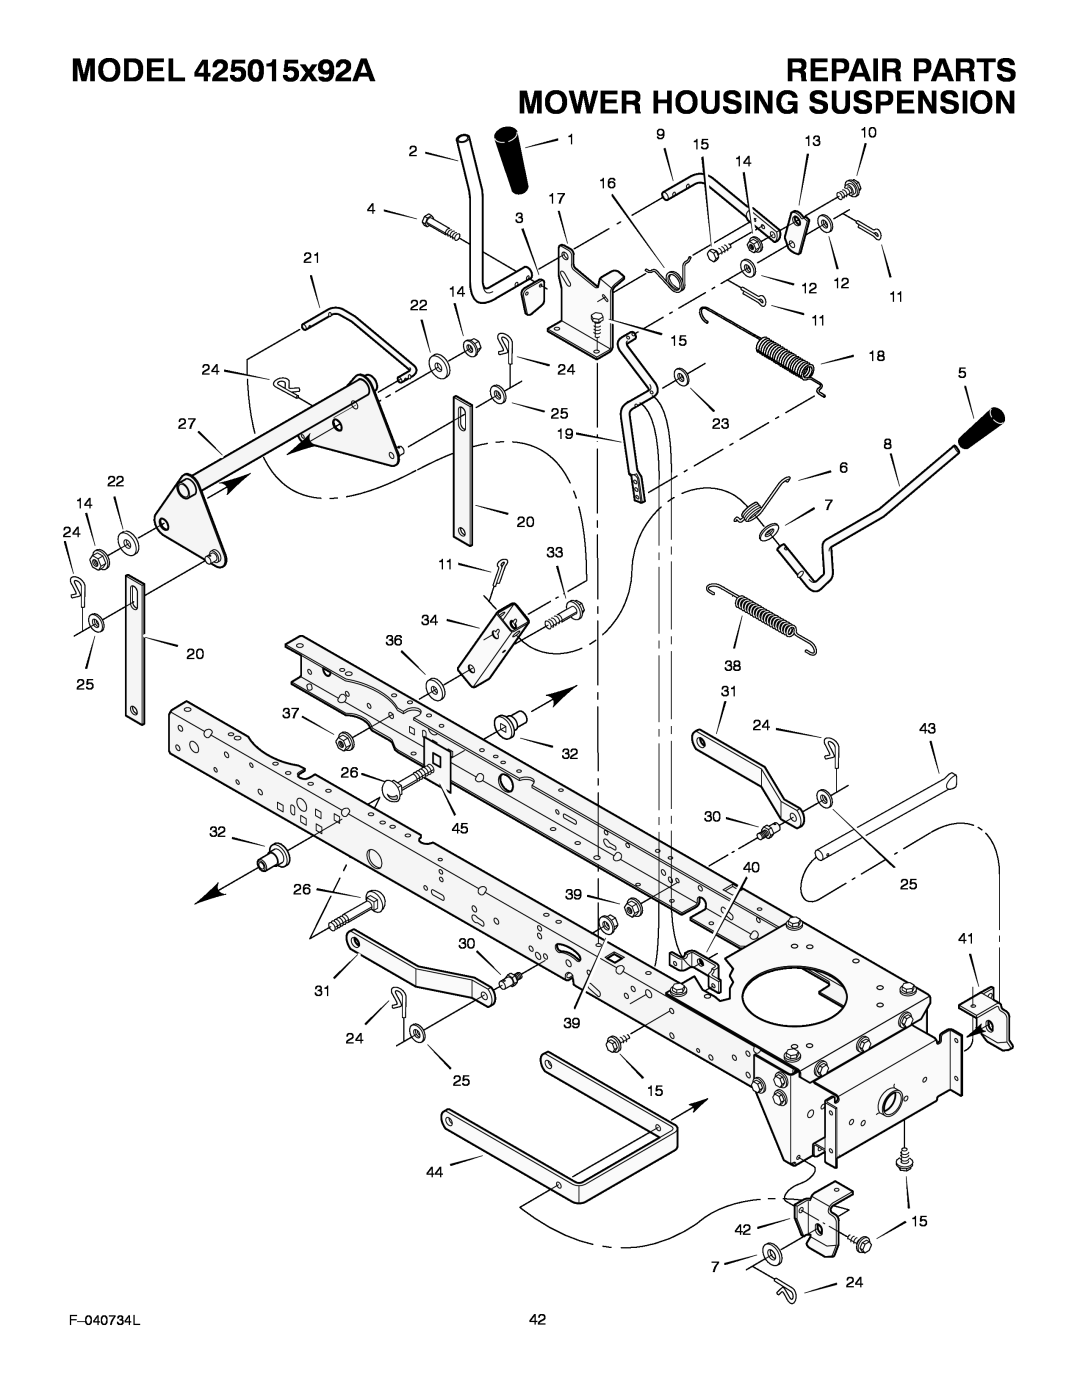 Murray manual Repair Parts Mower Housing Suspension, MODEL 425015x92A, F-040734L 